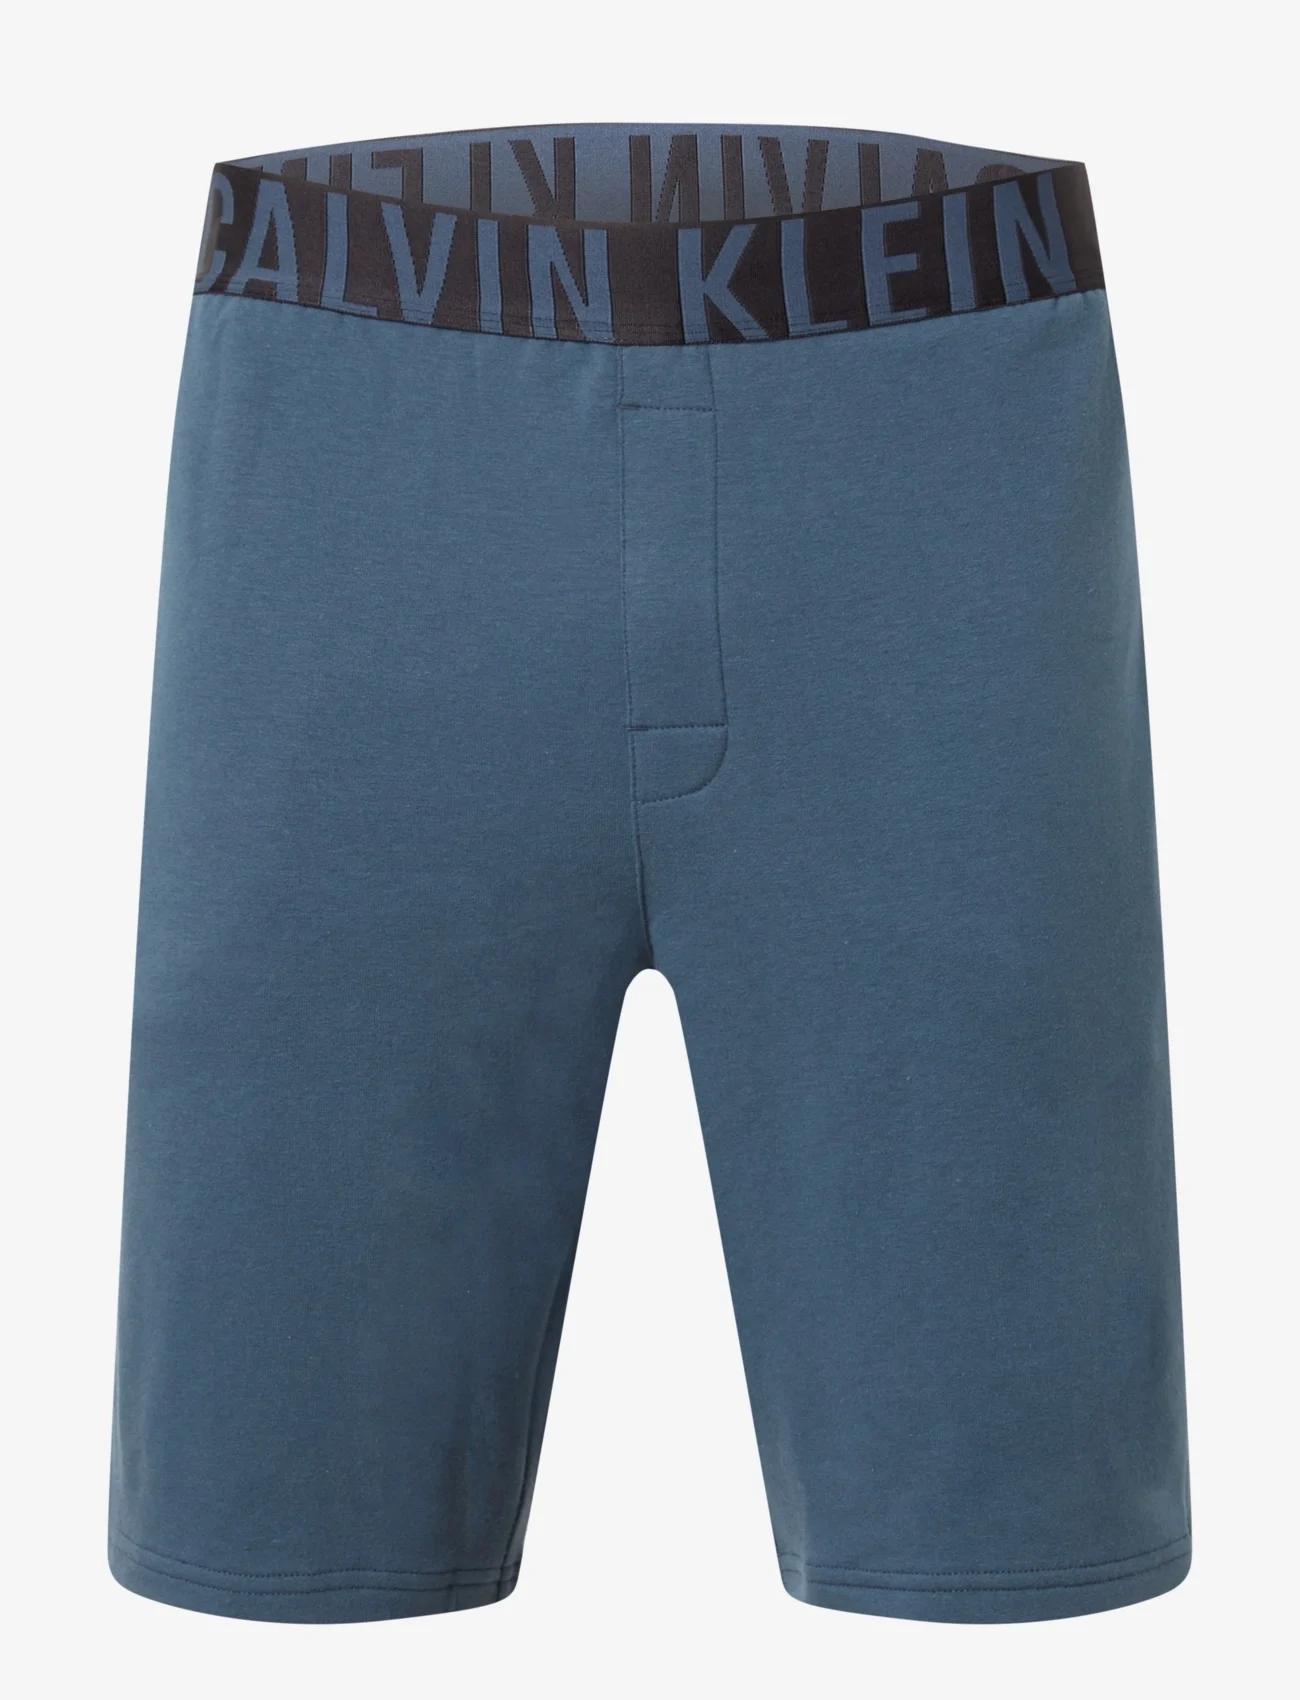 Calvin Klein - SLEEP SHORT - boxer shorts - hemisphere blue - 0